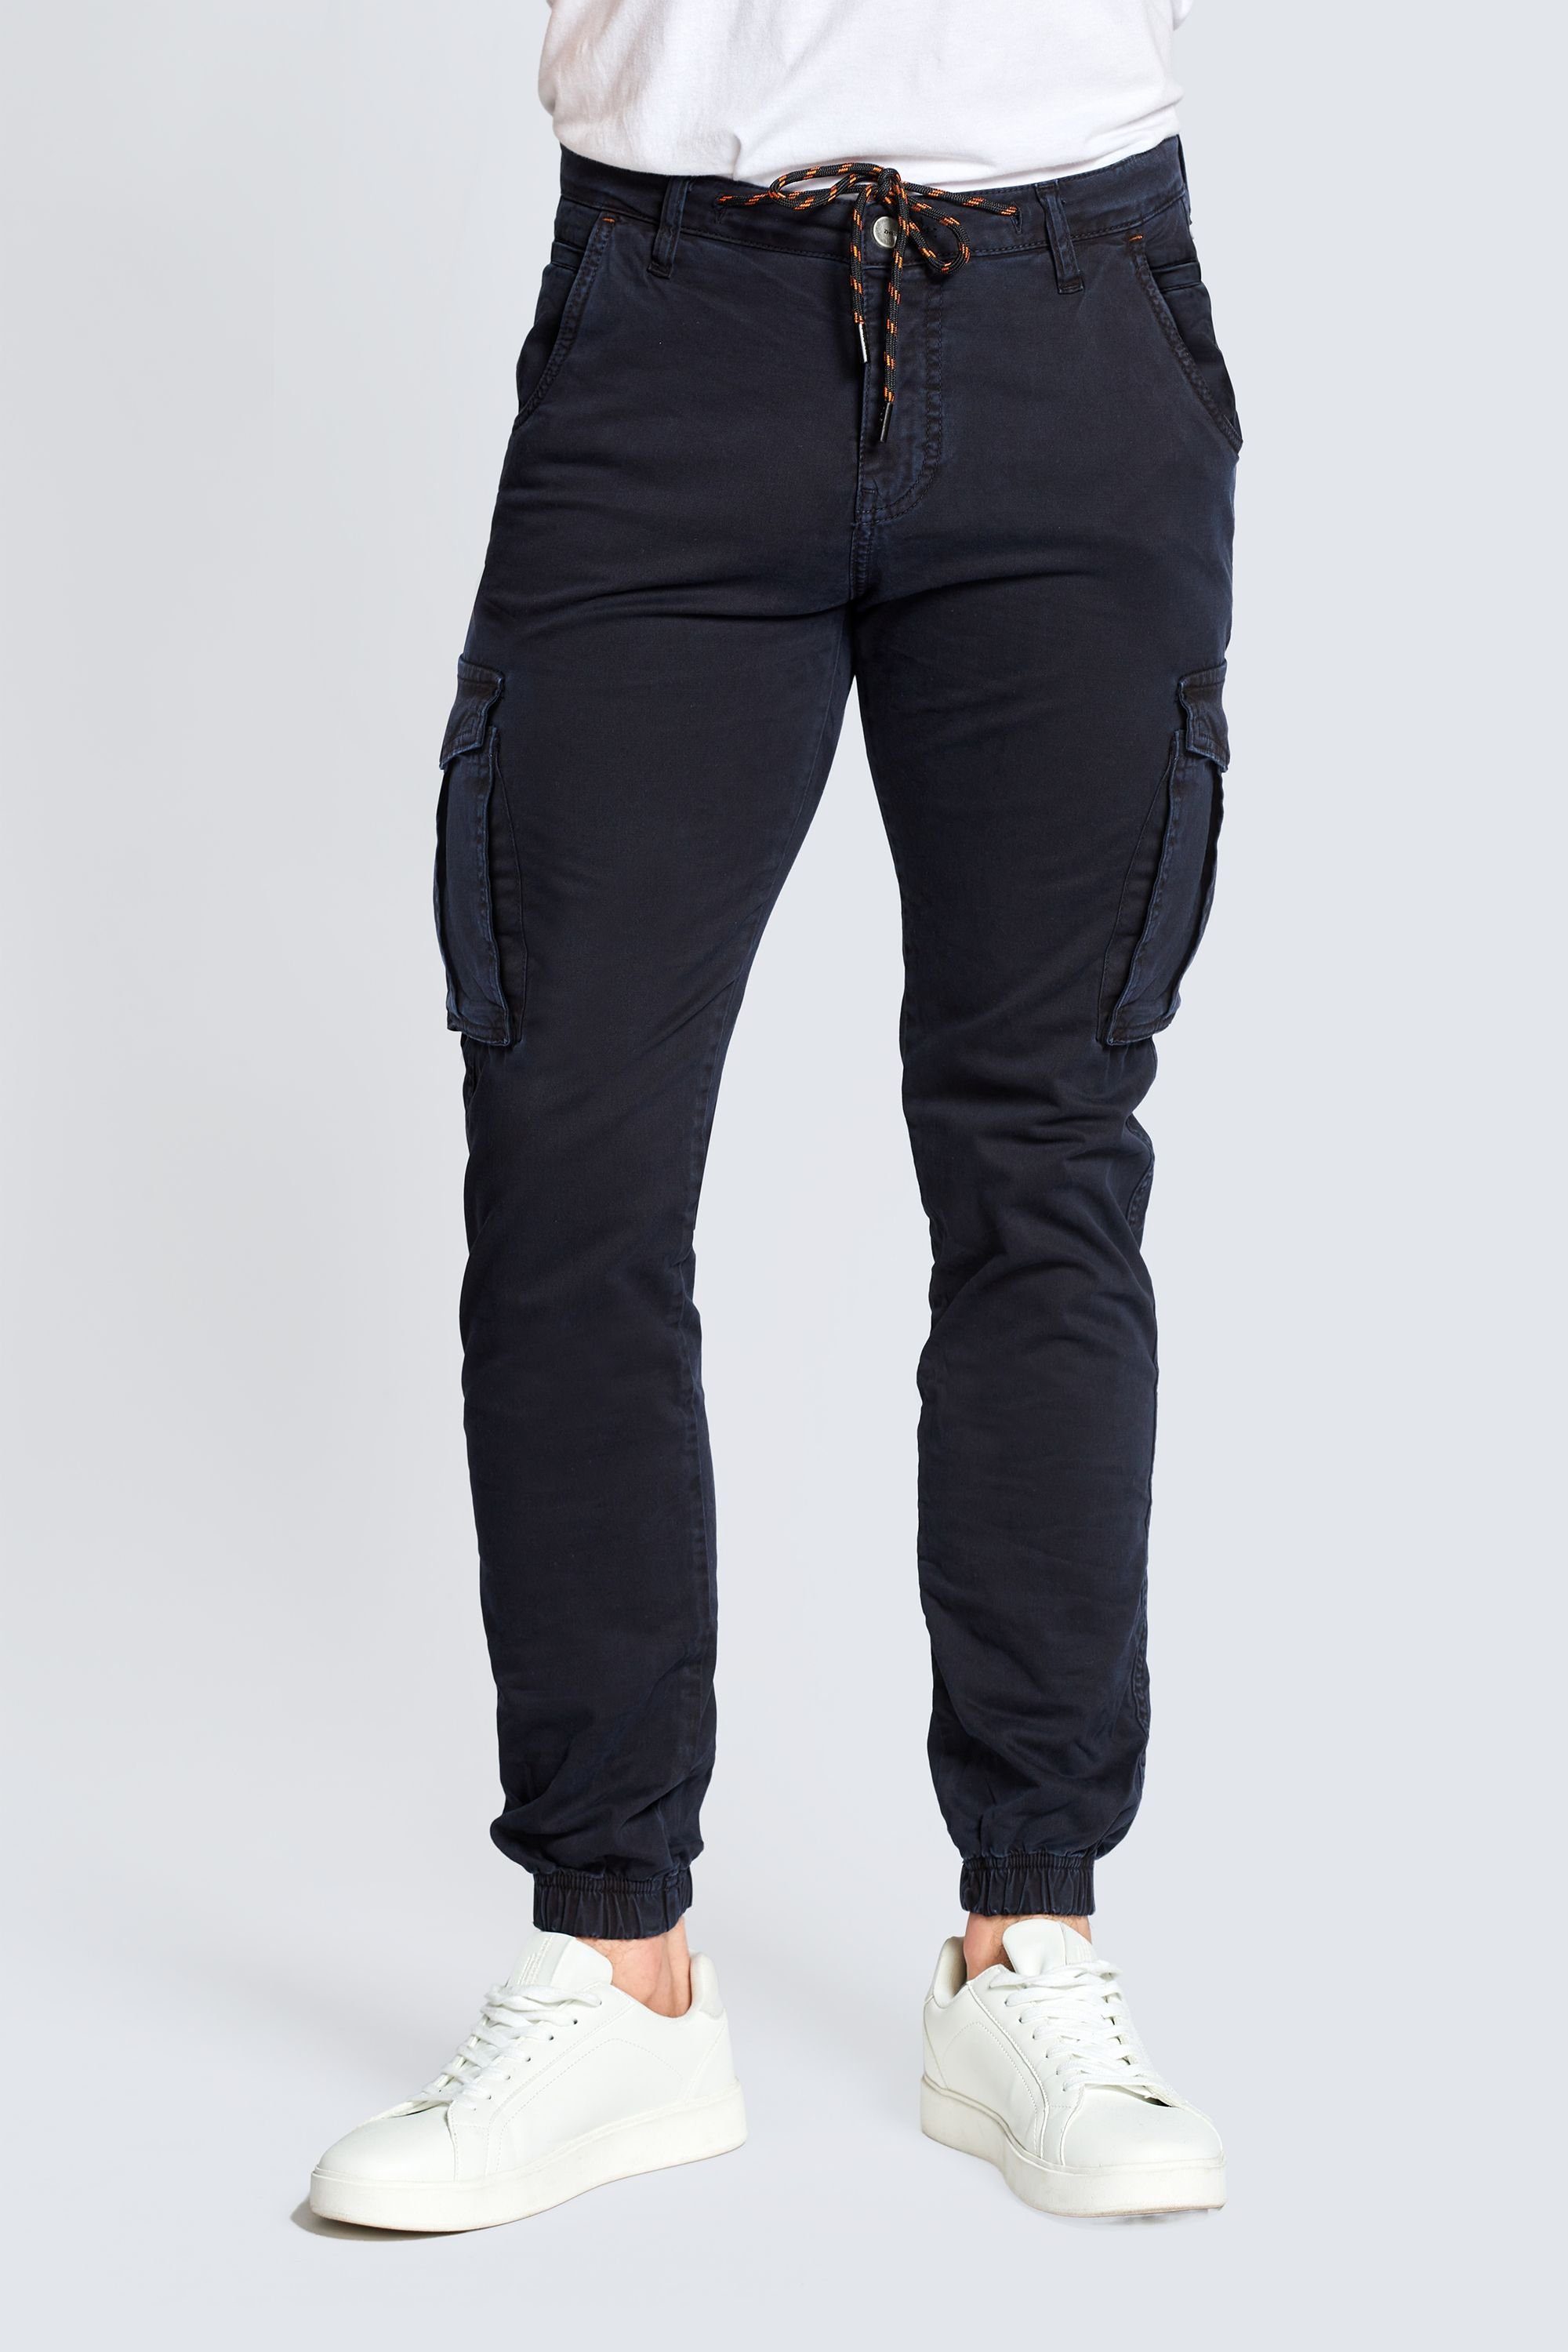 angenehmer Black Hose Tragekomfort 5-Pocket-Jeans MICHA Cargo Zhrill